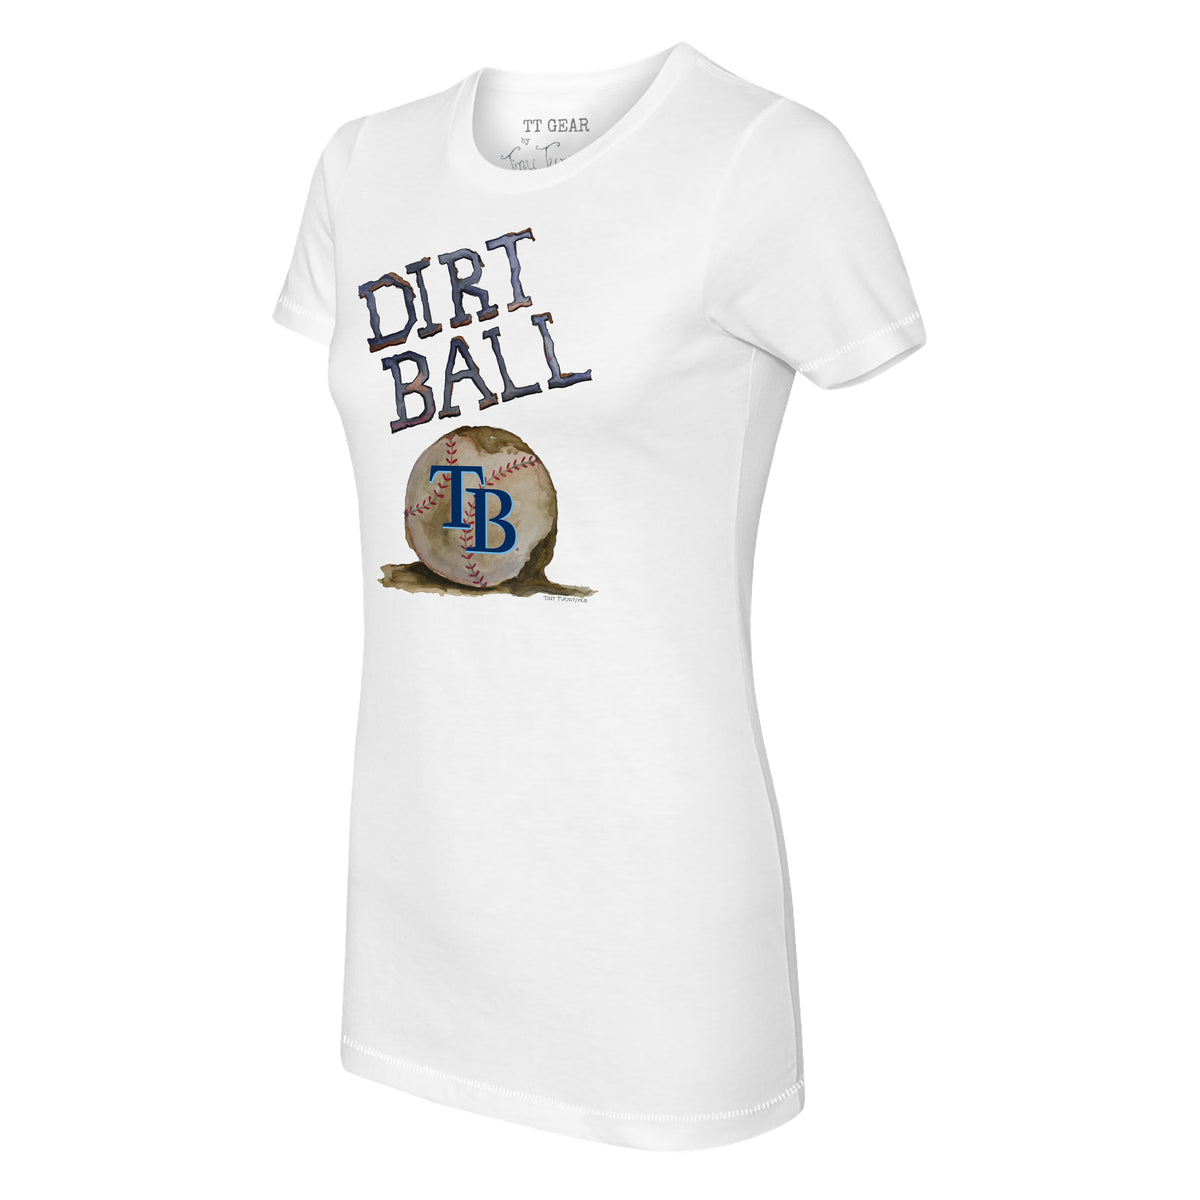 Tampa Bay Rays Dirt Ball Tee Shirt